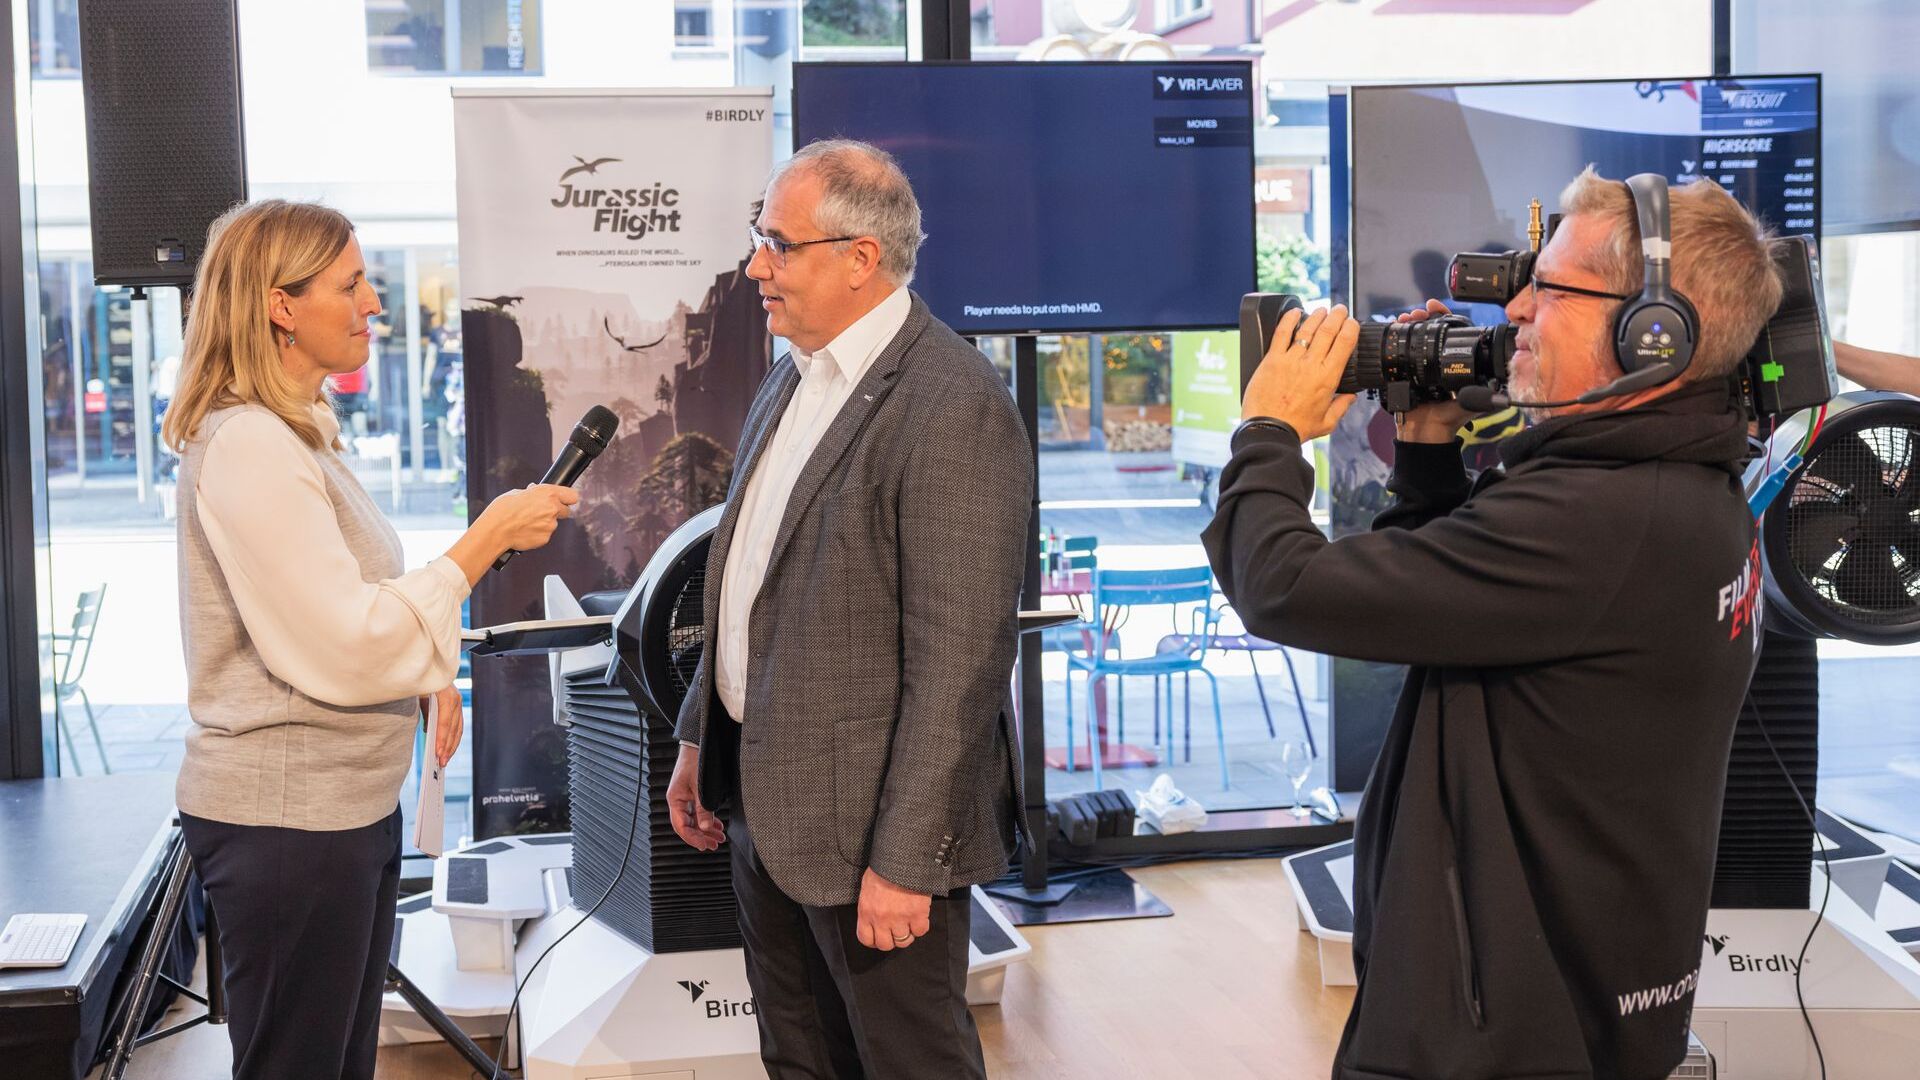 "Digitaltag Vaduz", ønsket velkommen av Kunstmuseum i hovedstaden i fyrstedømmet Liechtenstein lørdag 6. november 2021, vekket entusiasmen blant publikum og foredragsholdere i analogi med "Swiss Digital Day" påfølgende dag 10: intervju med Manfred Bischof, ordfører i hovedstaden